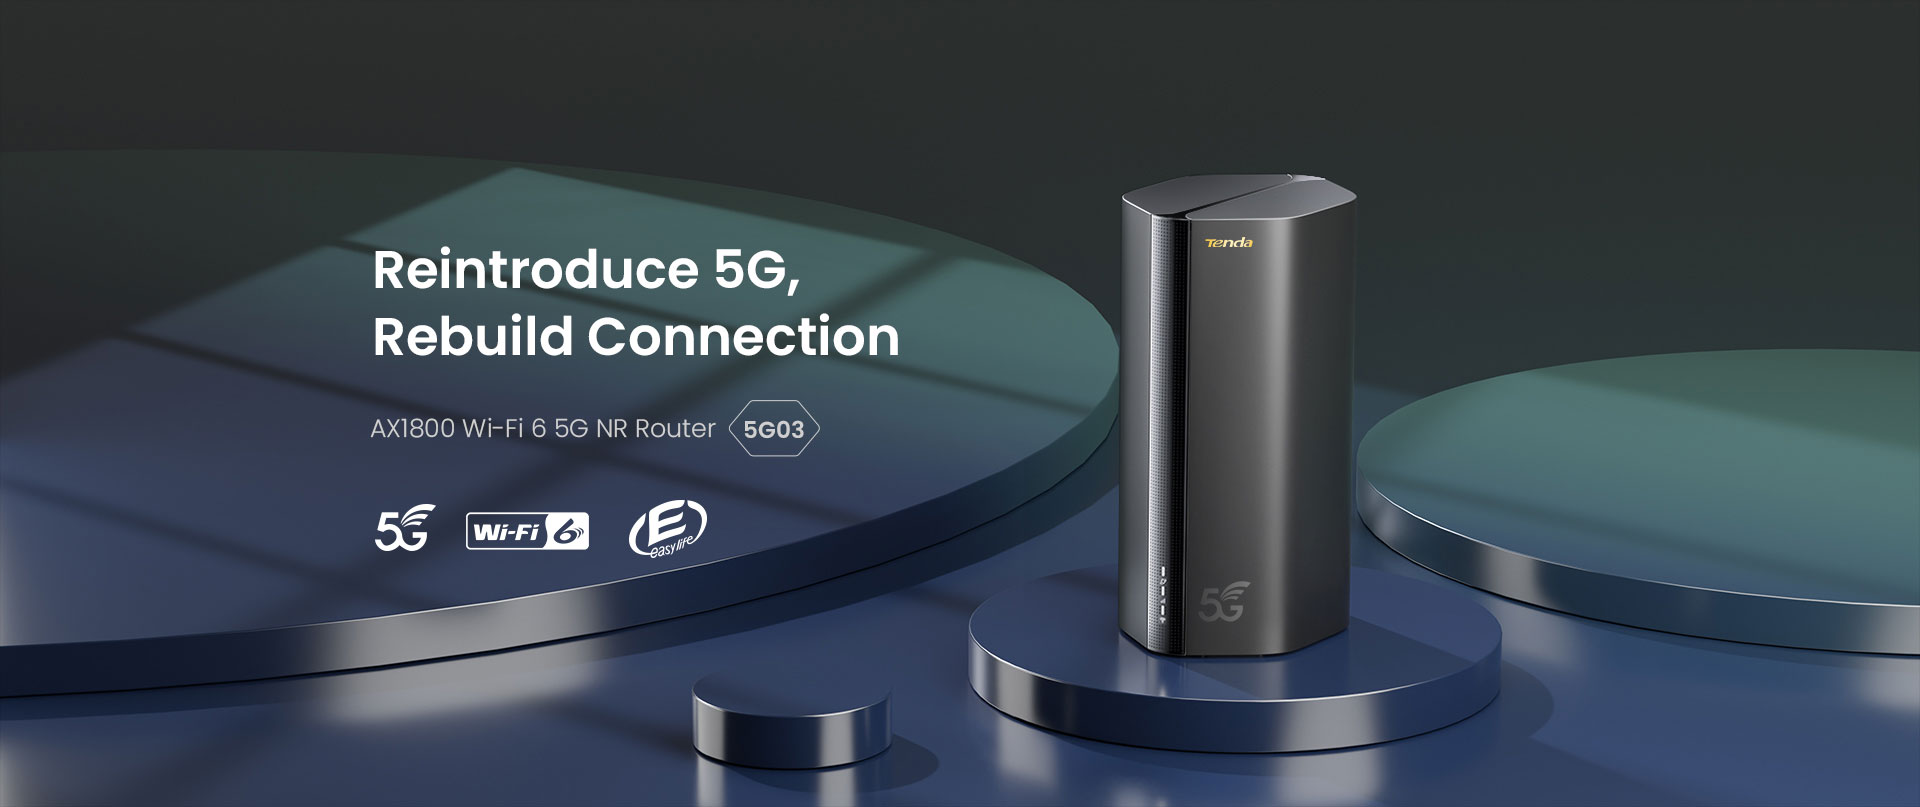 5G03 AX1800 Wi-Fi 6 5G NR Router -Tenda (Saudi Arabia)